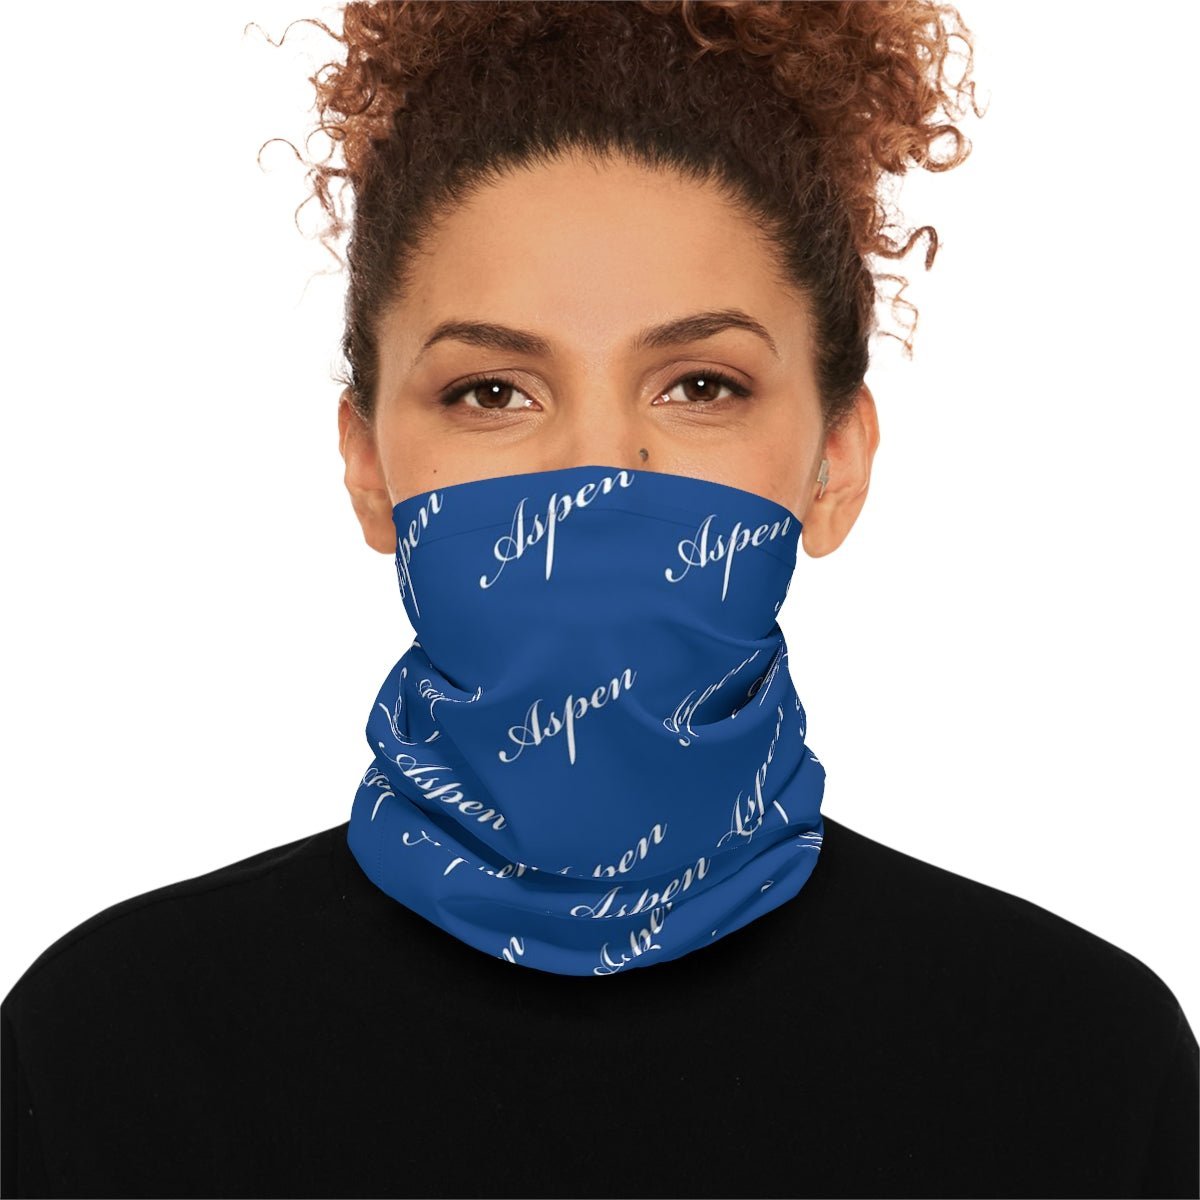 Fashionable Neck Gaiter For Women Girls Men - Multi-Purpose UPF 50+ UV+ Full Face Mask Buff Balaclava Blue Aspen - Studio40ParkLane